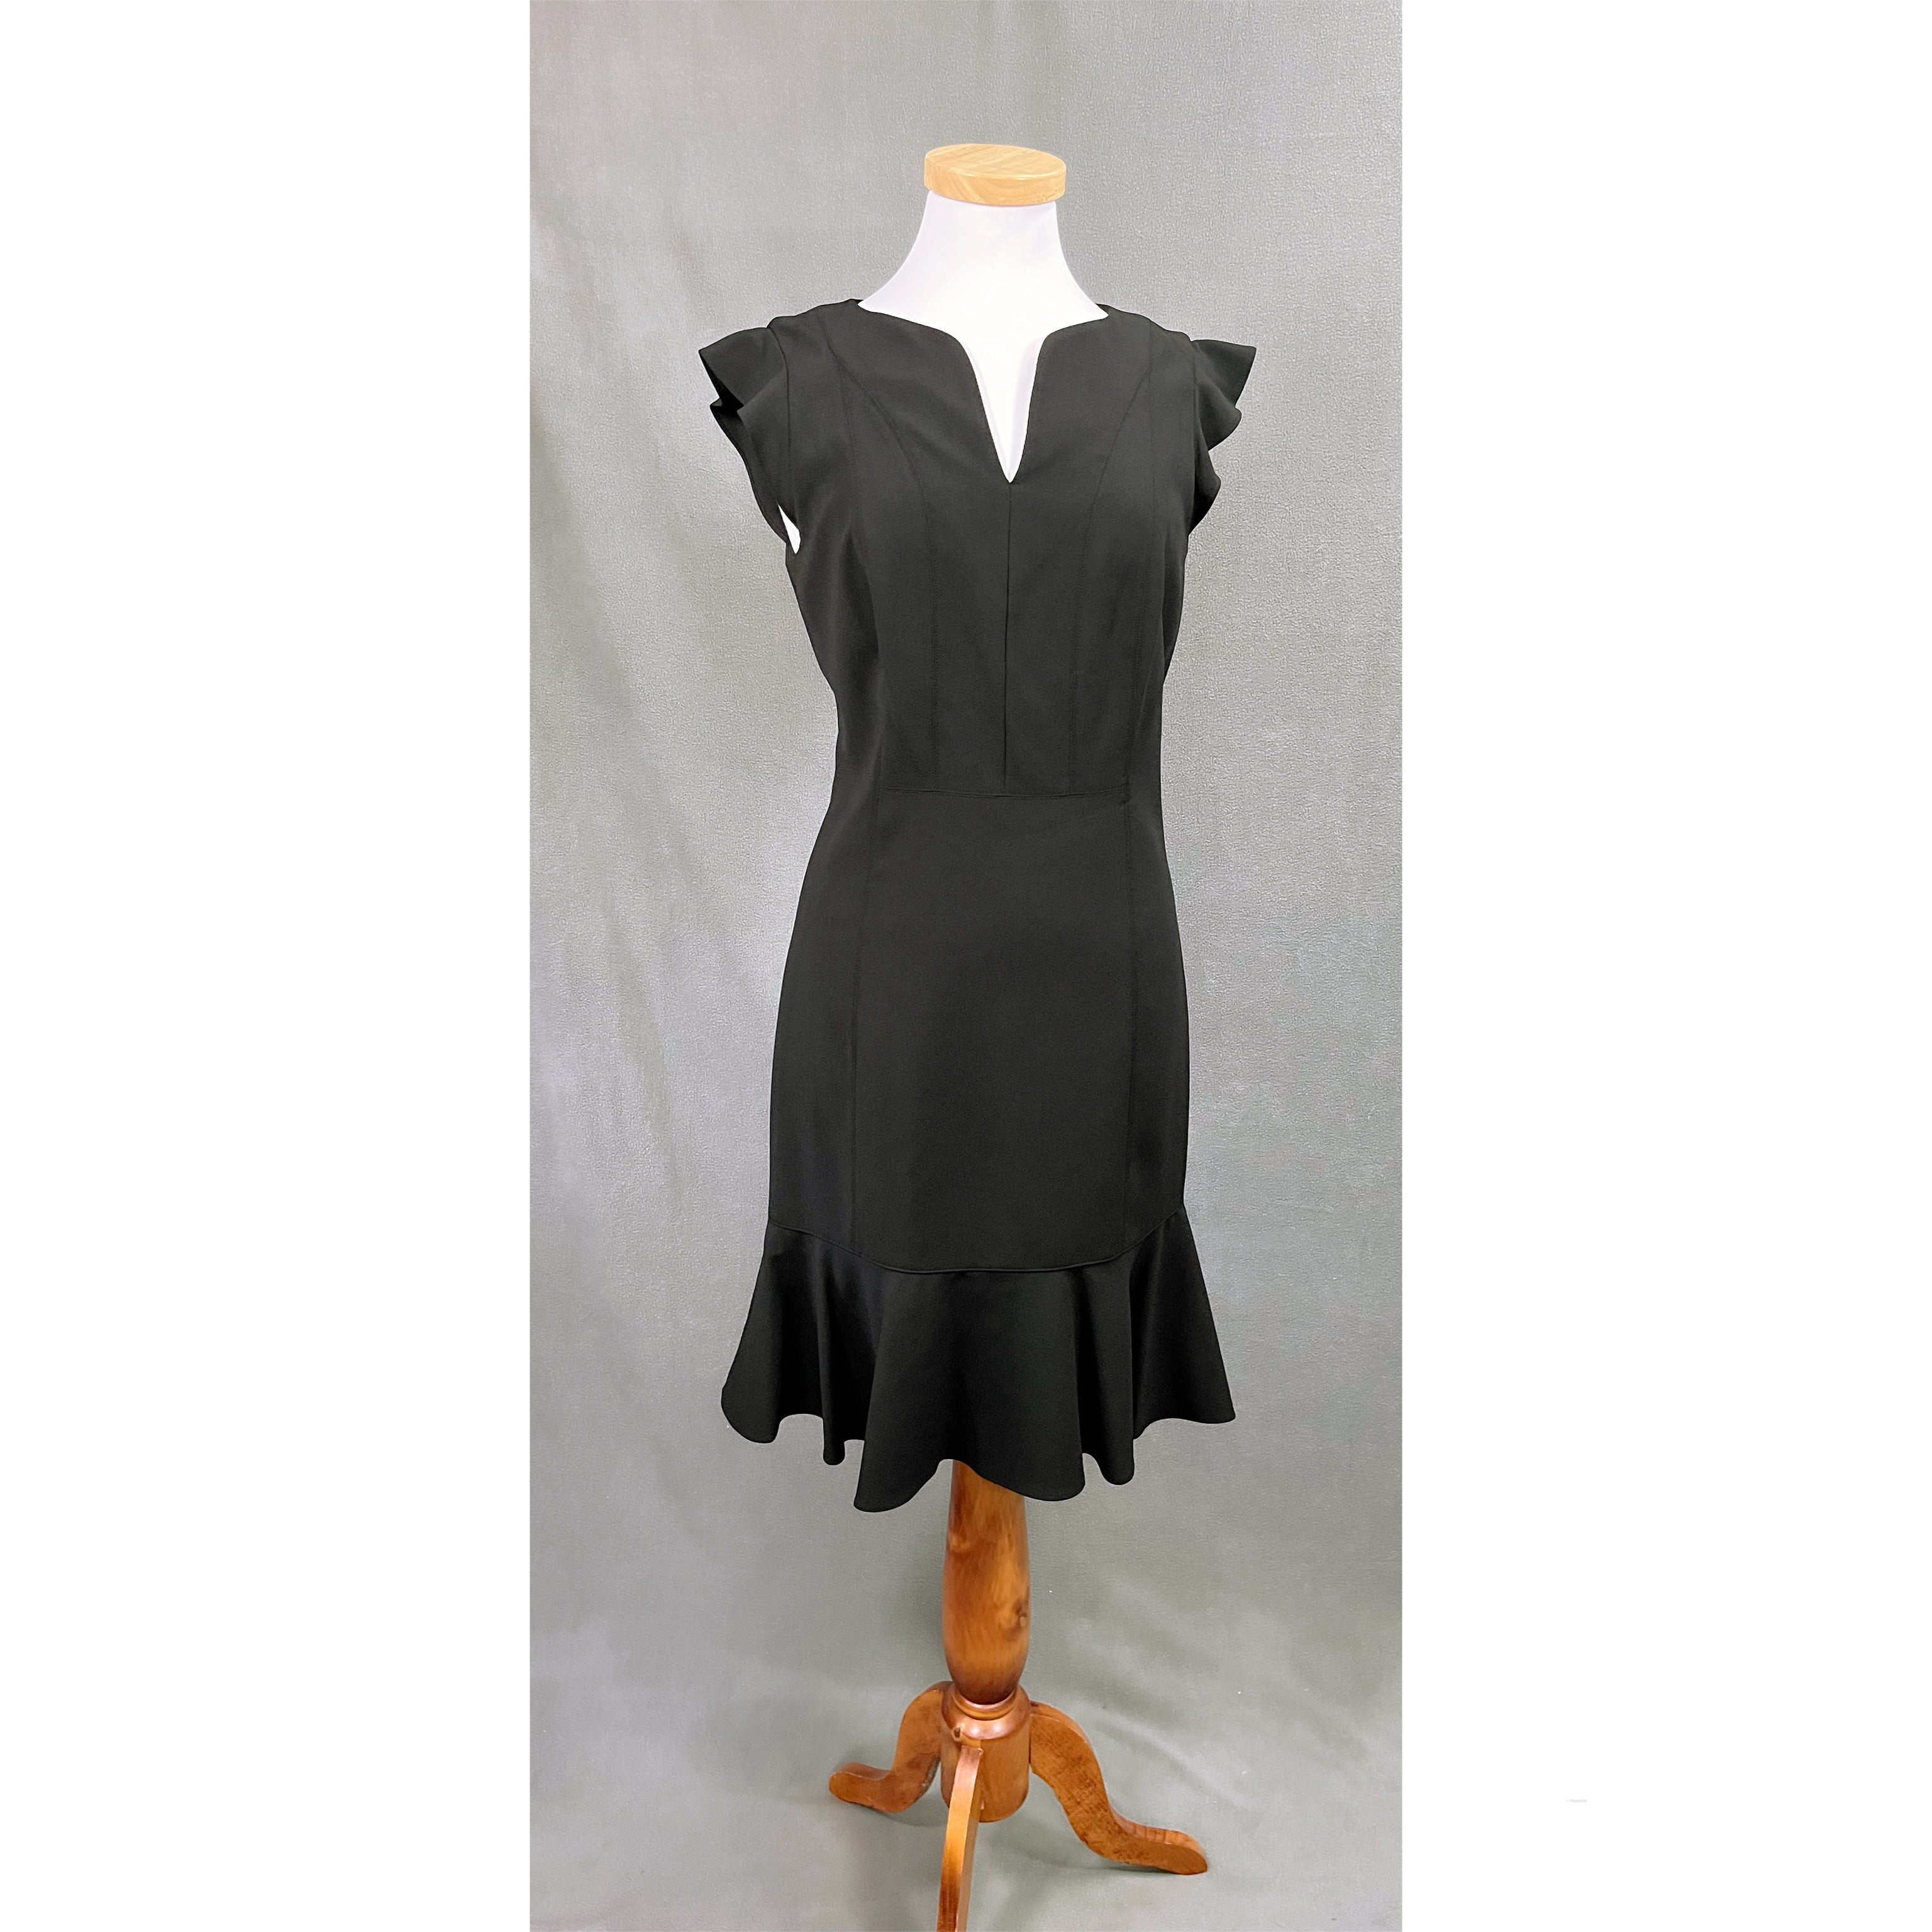 Elie Tahari black dress, size 8, NEW WITH TAGS!